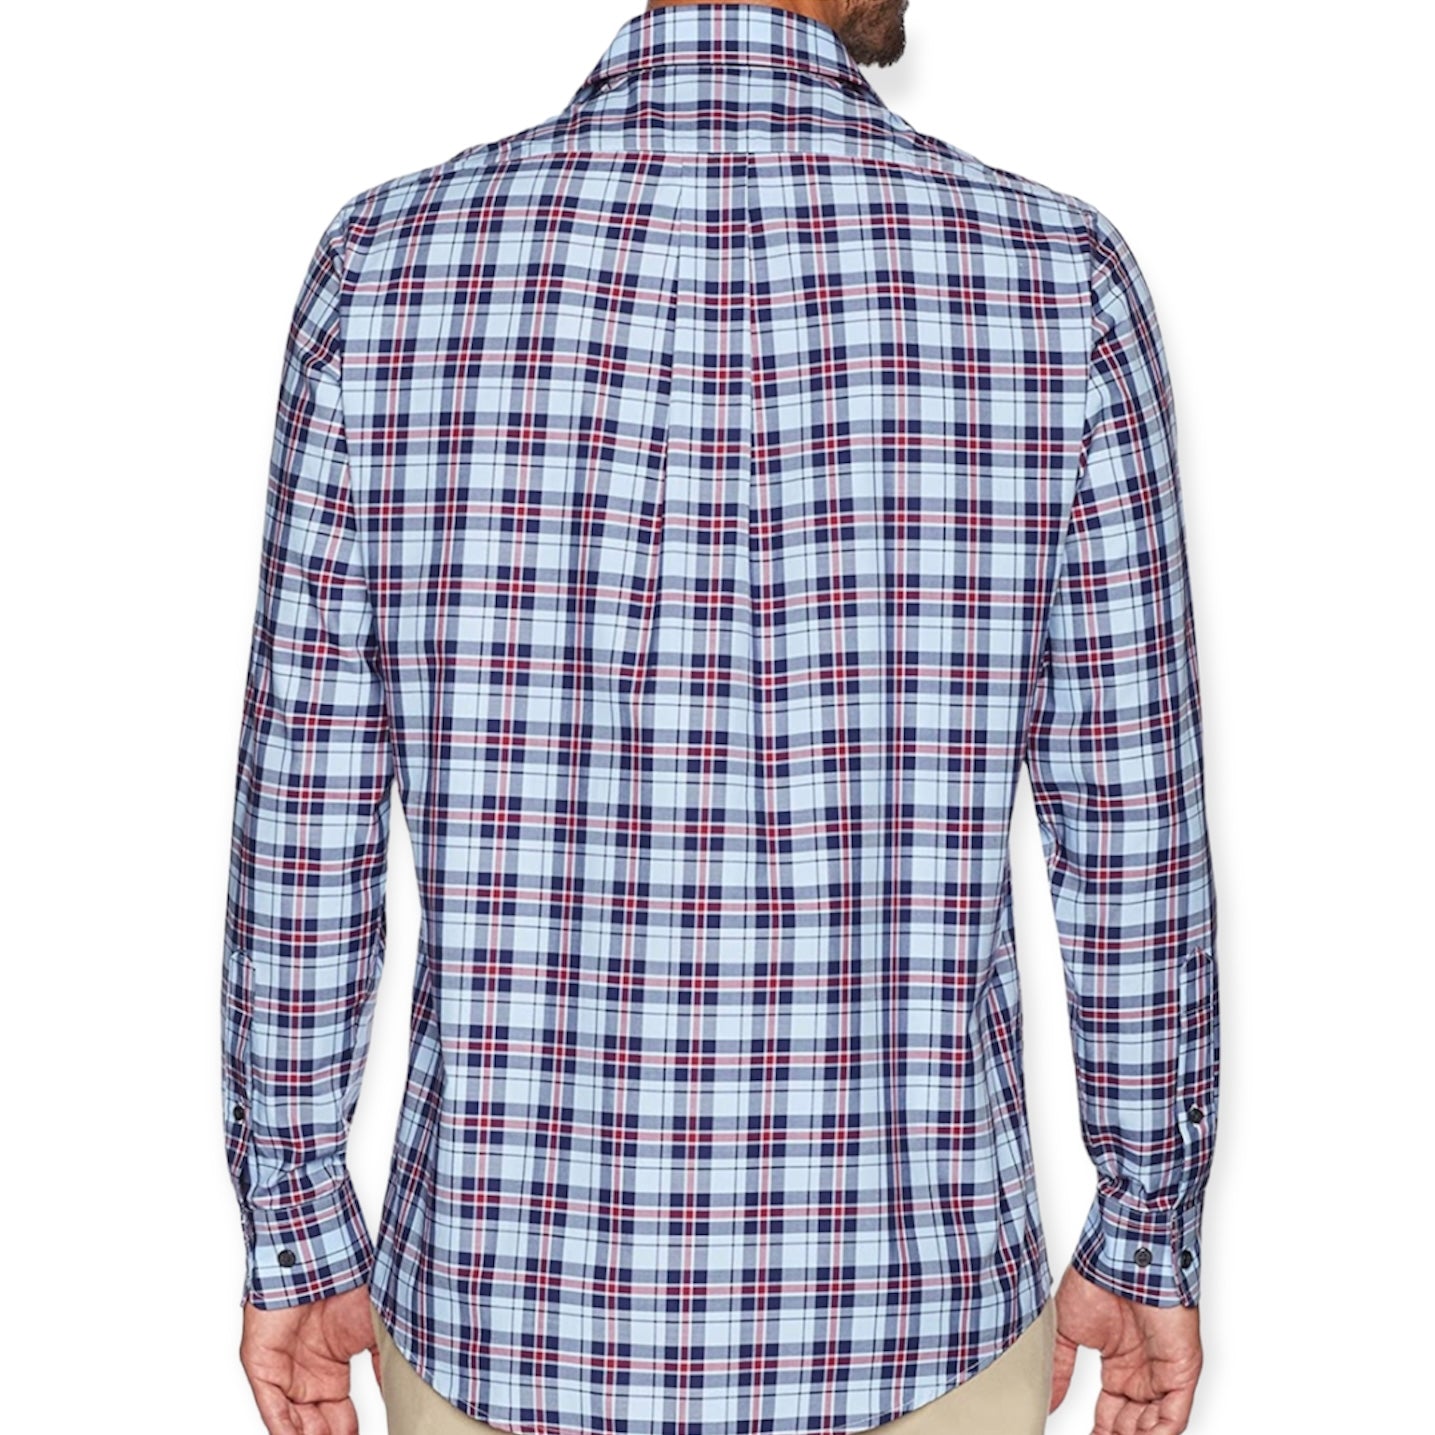 Classic Blue/Red Plaid Print Long Sleeve Size S Men's Shirt